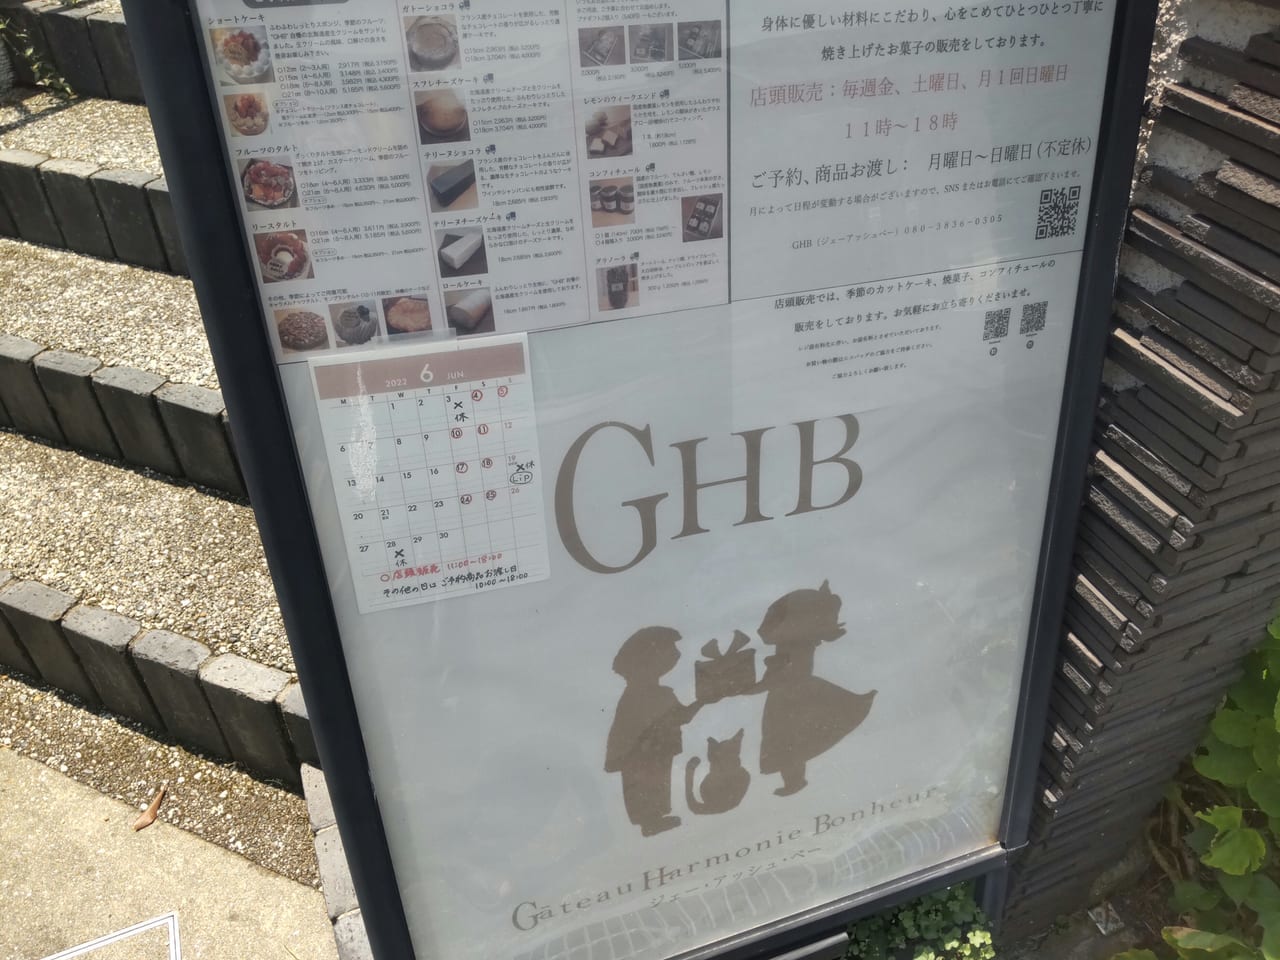 GHB Gateau Harmonie Bonheur